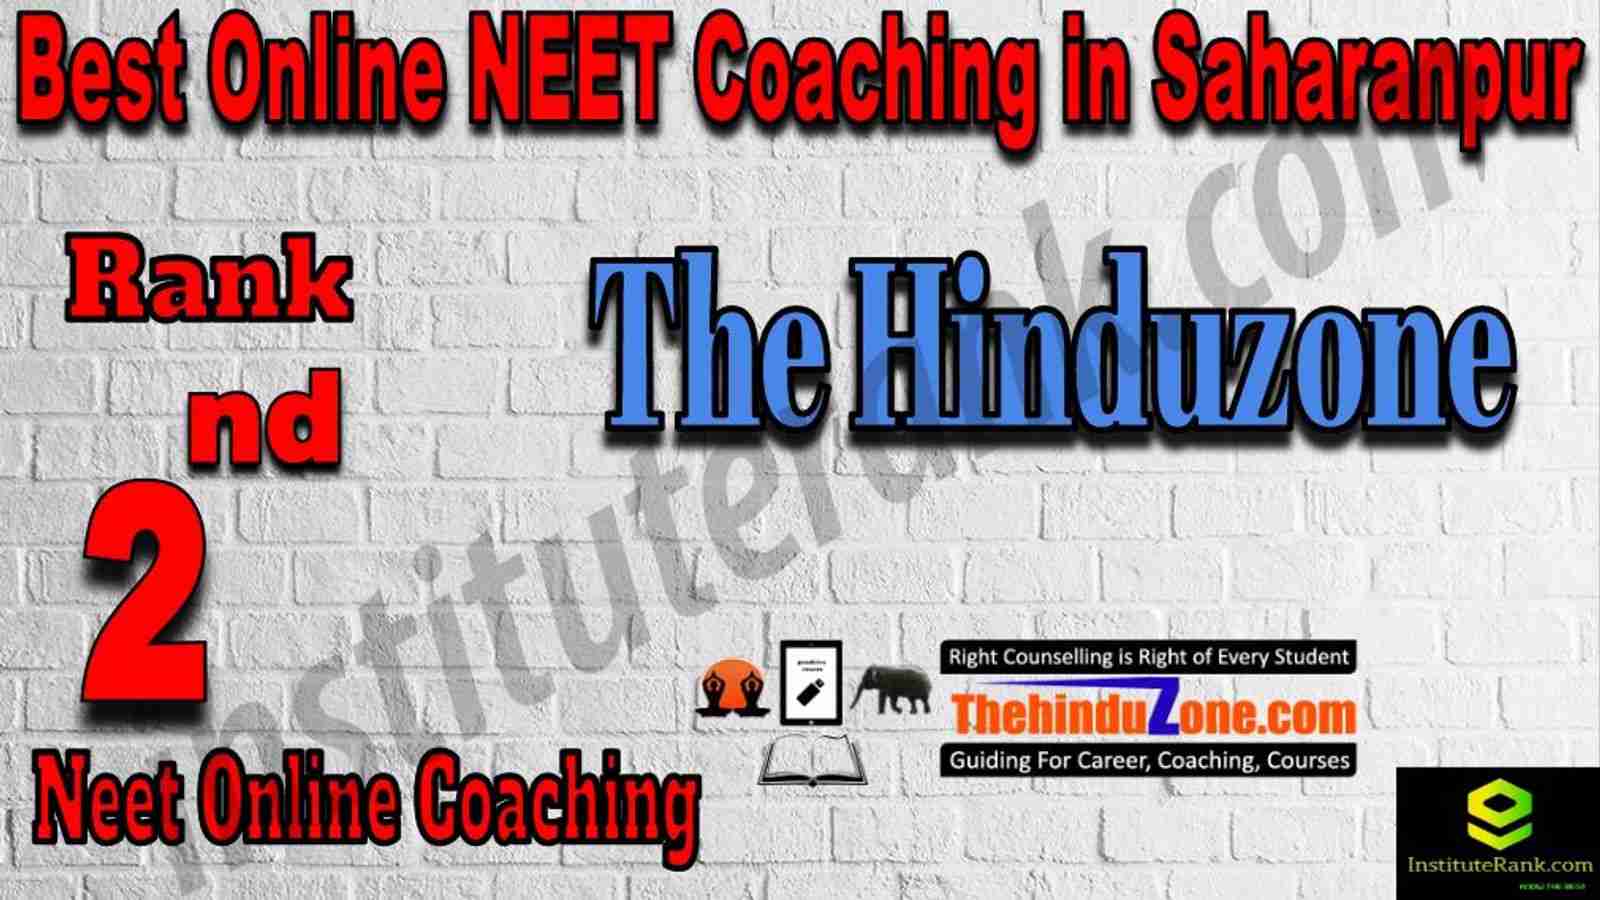 2nd Best Online Neet Coaching in Saharanpur